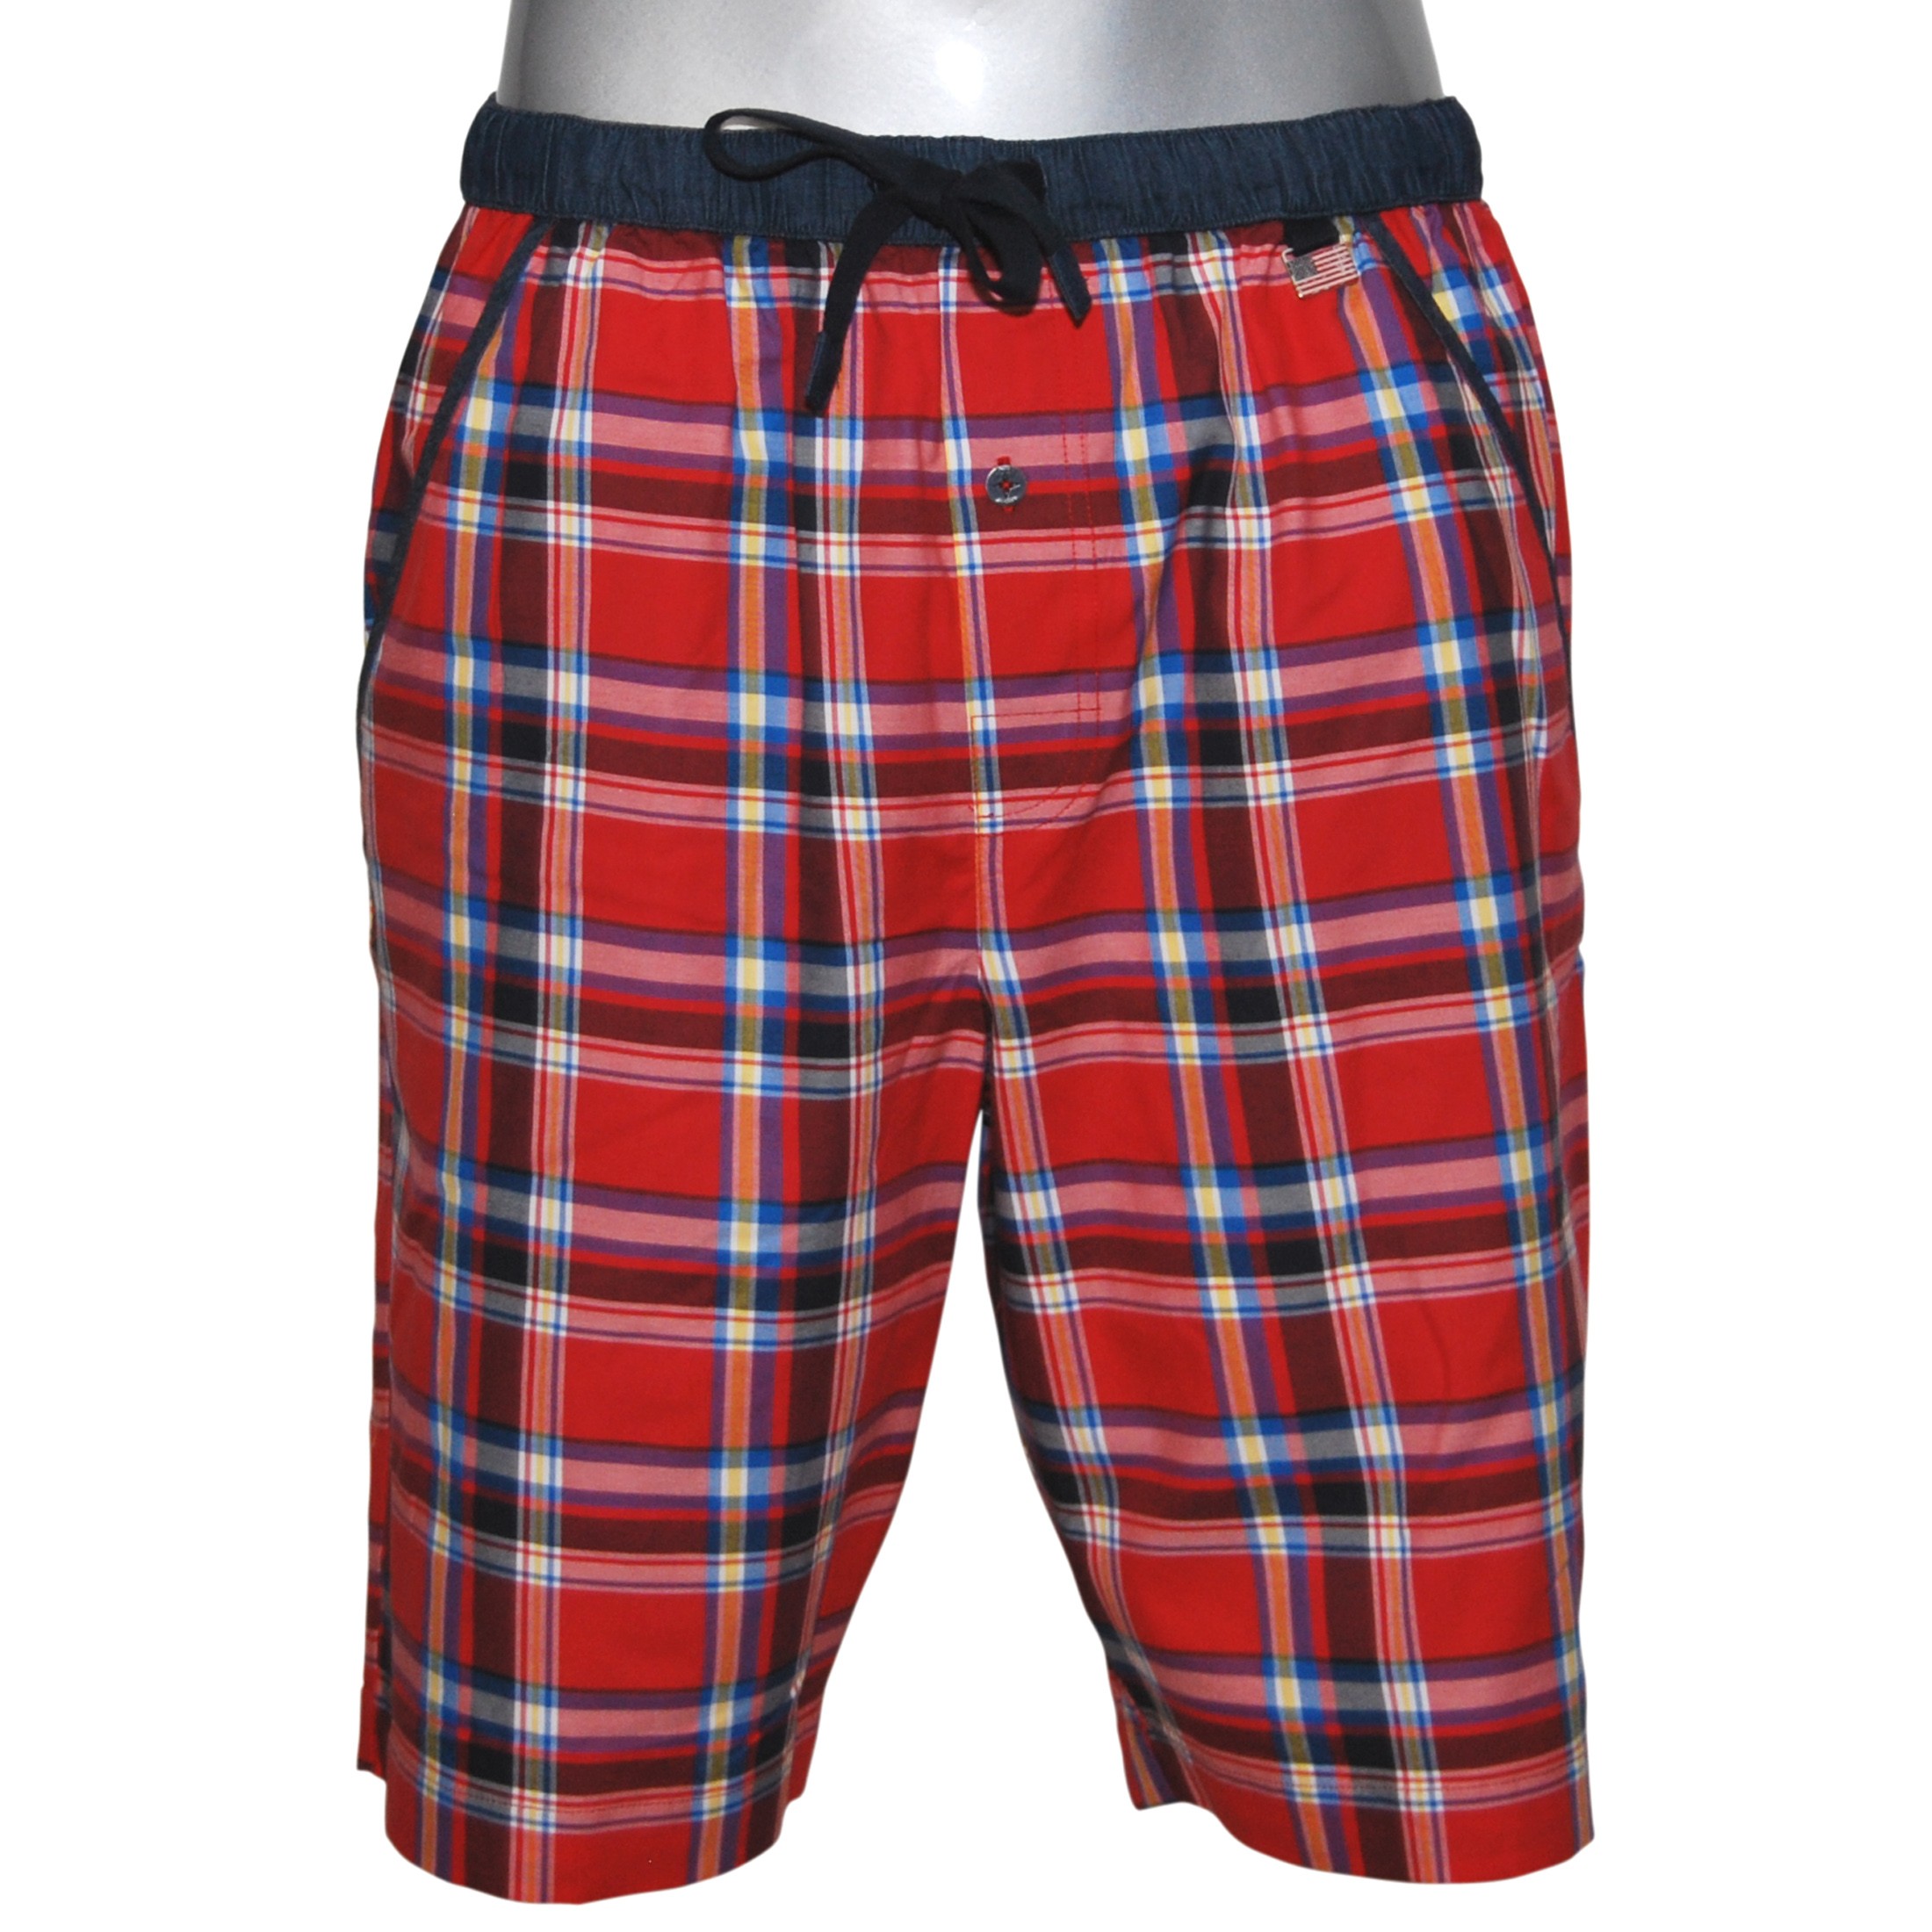 Jockey Shorts Bermuda Lounge Nightwear Pyjama Shorts